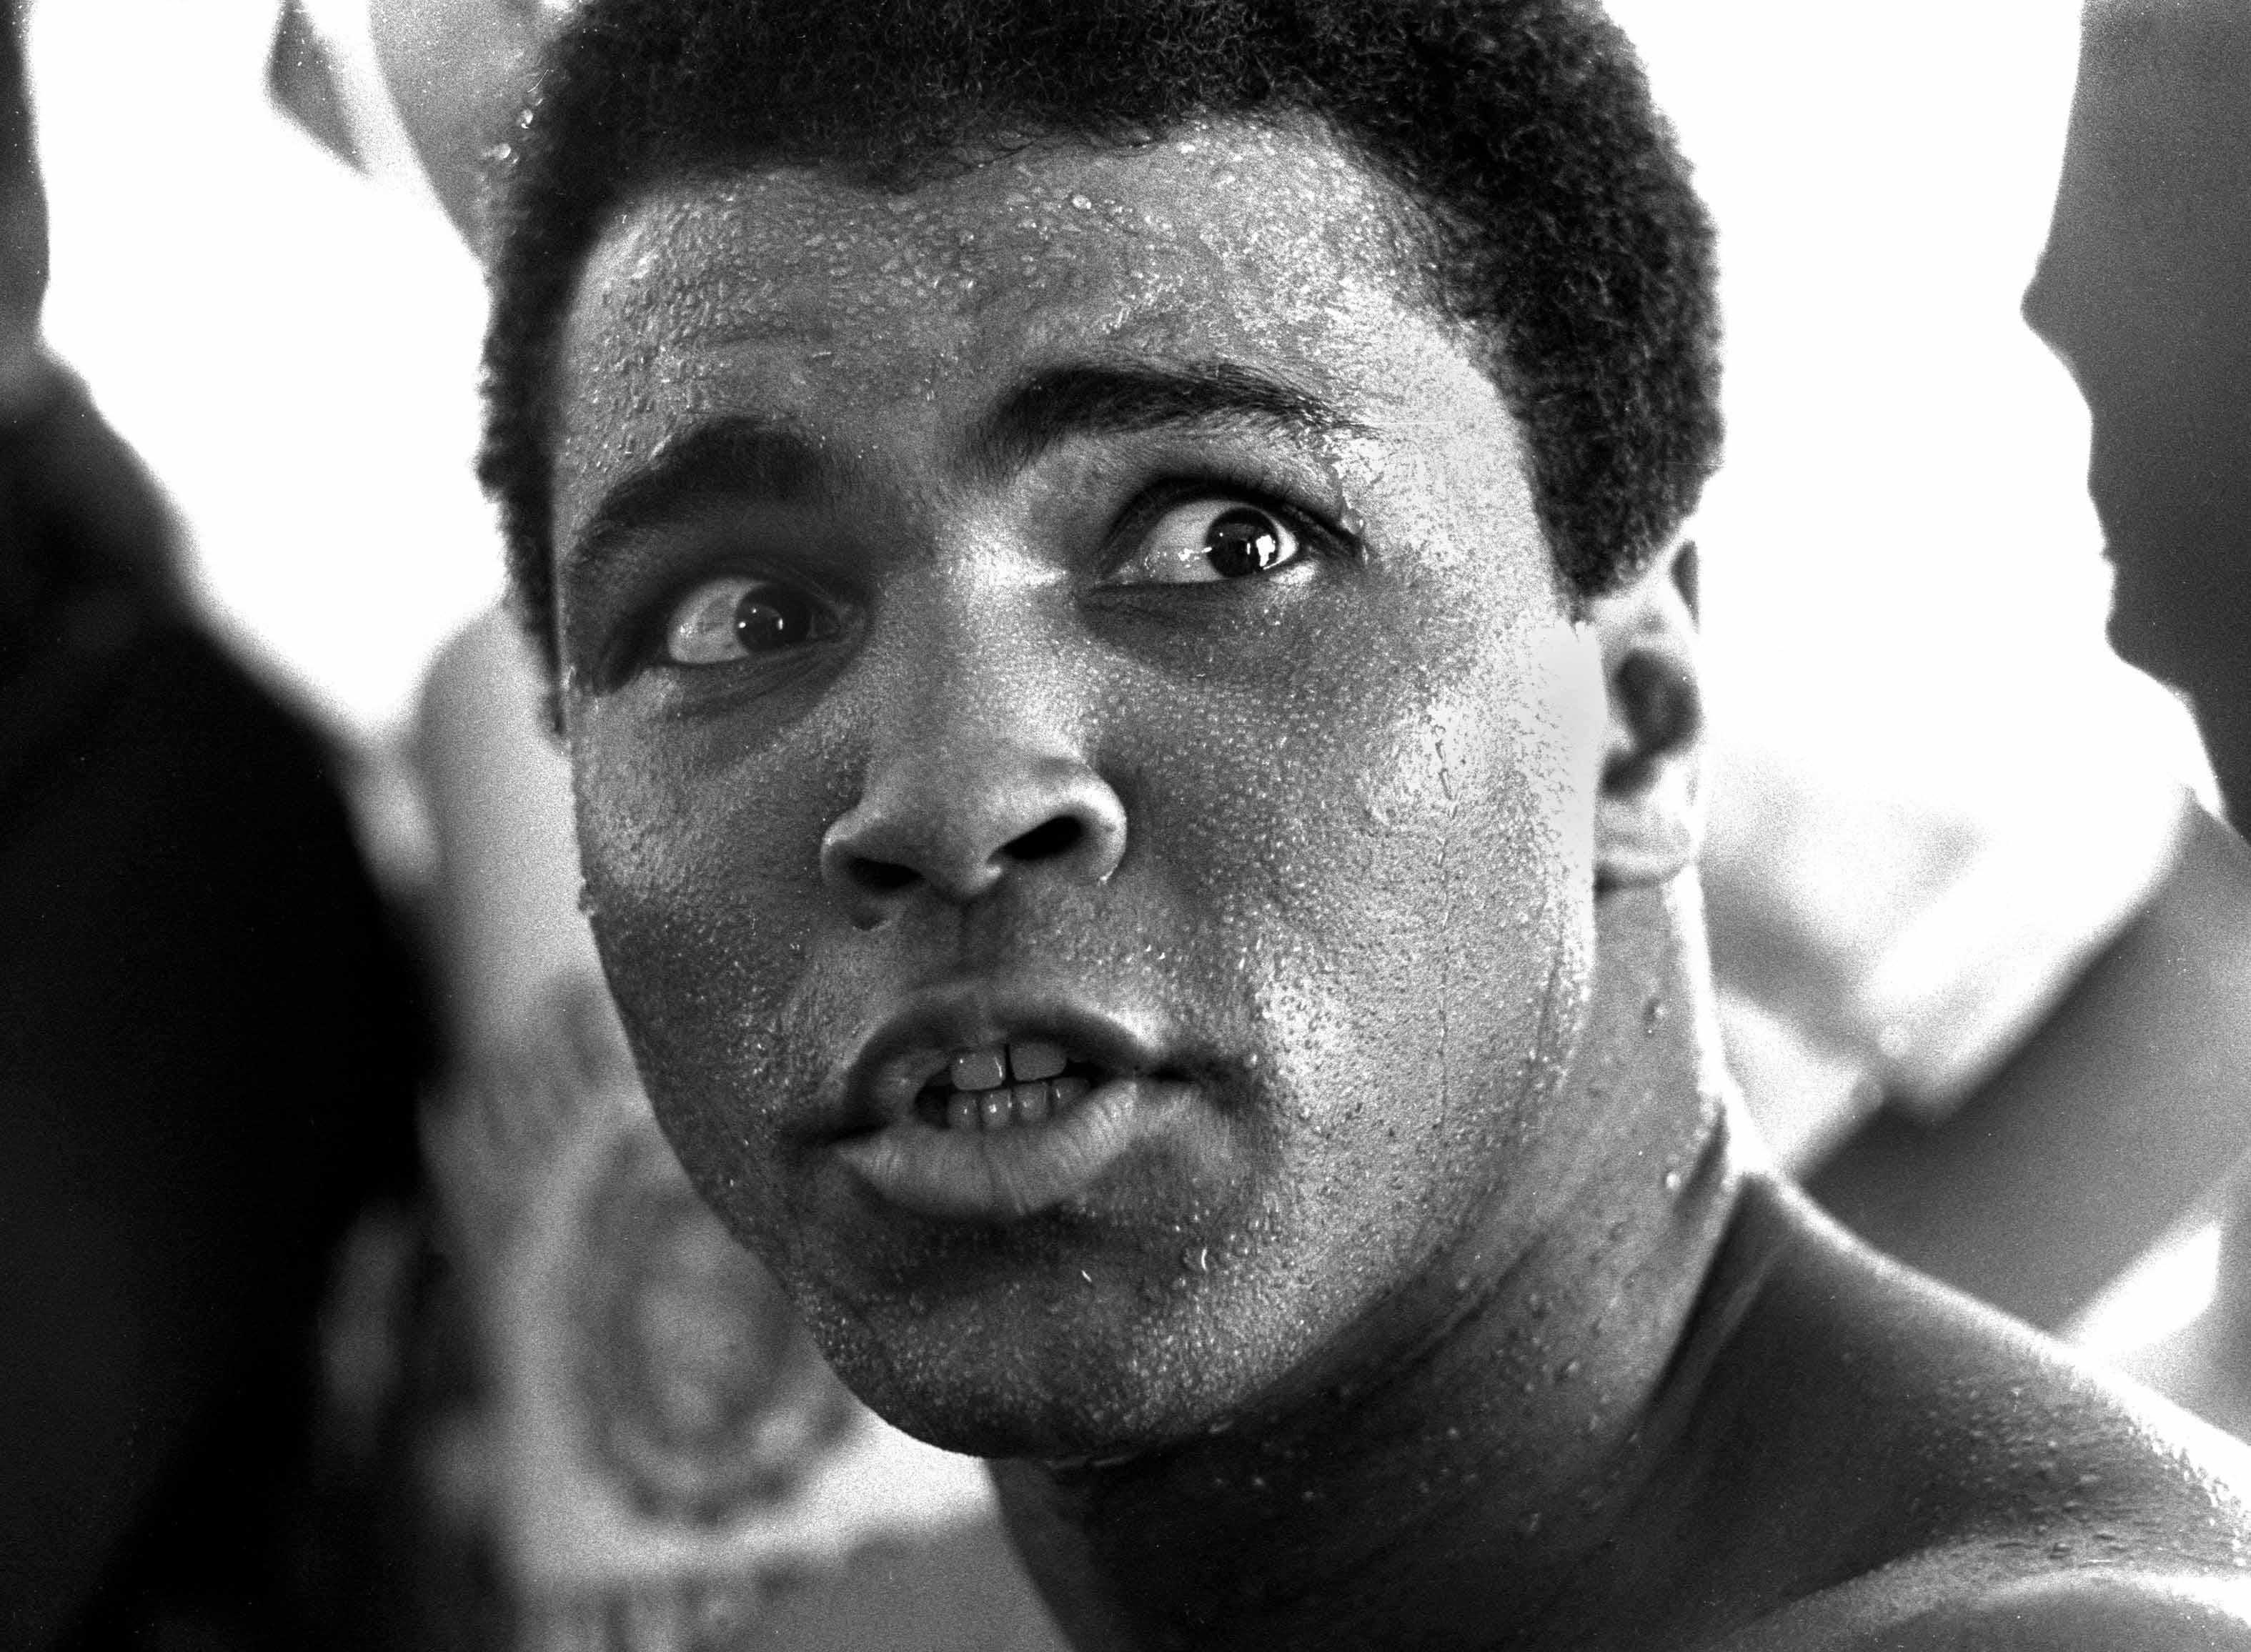 Mug Shot - Chris Smith, Muhammad Ali, boxing, black & white, 20x30 in